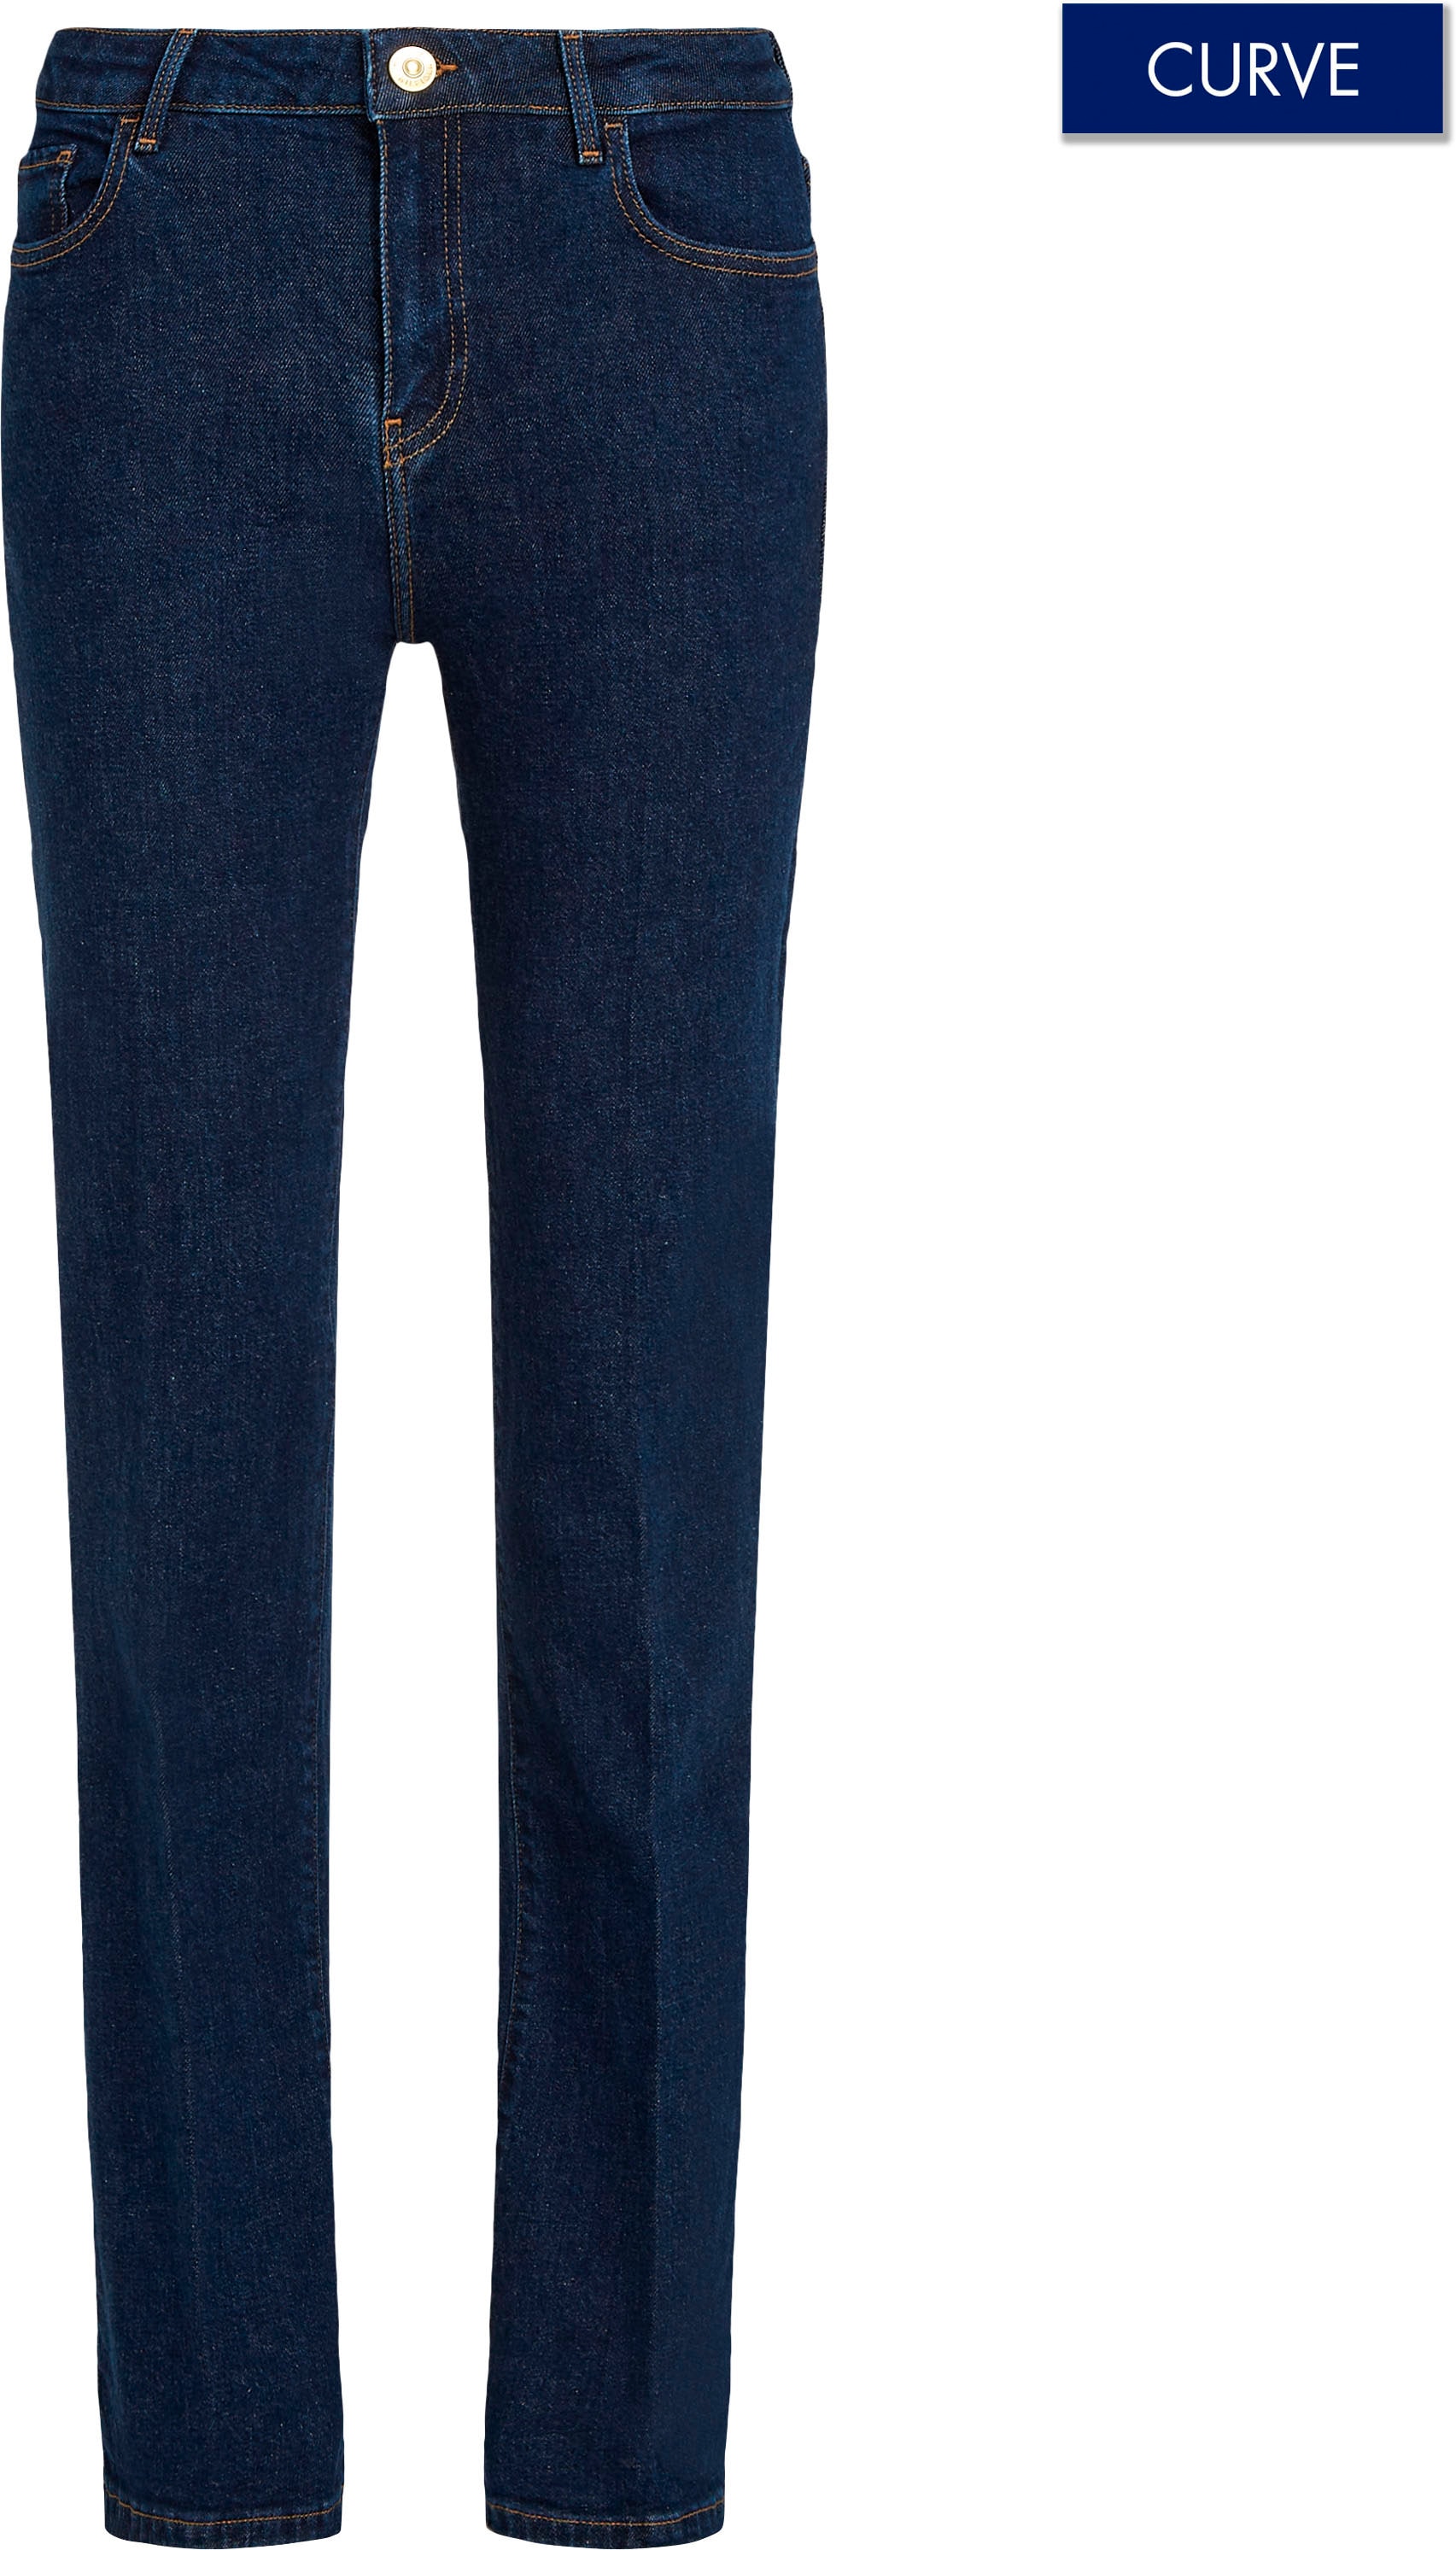 Tommy Hilfiger Curve Bootcut-Jeans »CRV BOOTCUT RW CLER«, Grosse Grössen in Stoned Washed Optik